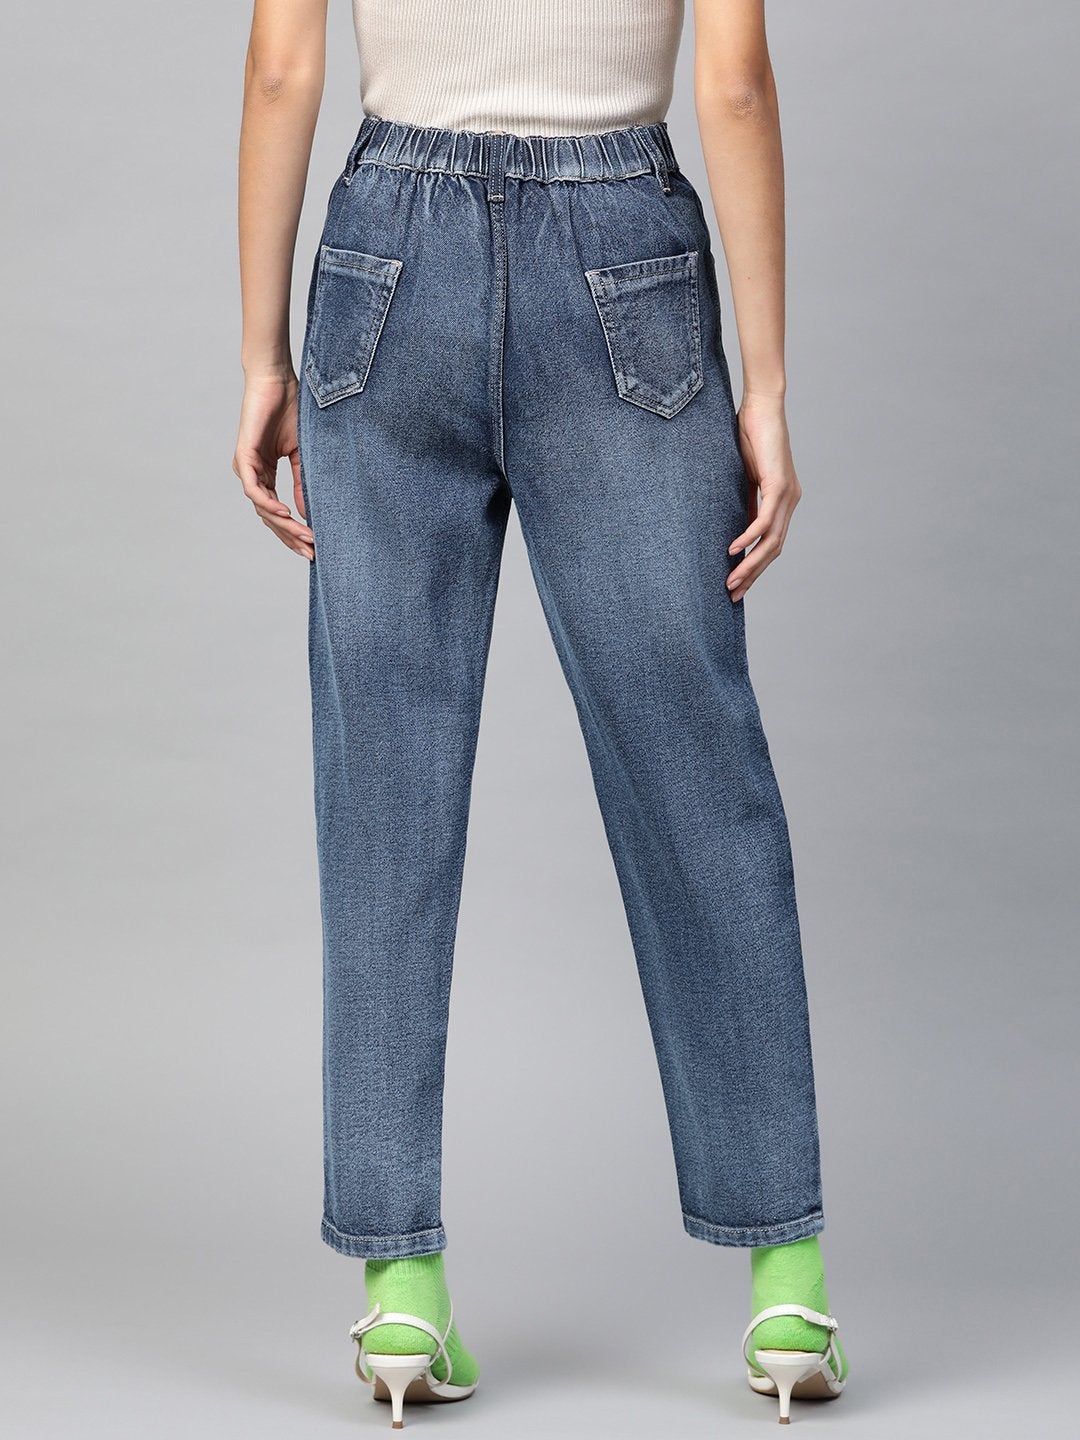 Women's Blue Vintage Distress Jeans - SASSAFRAS